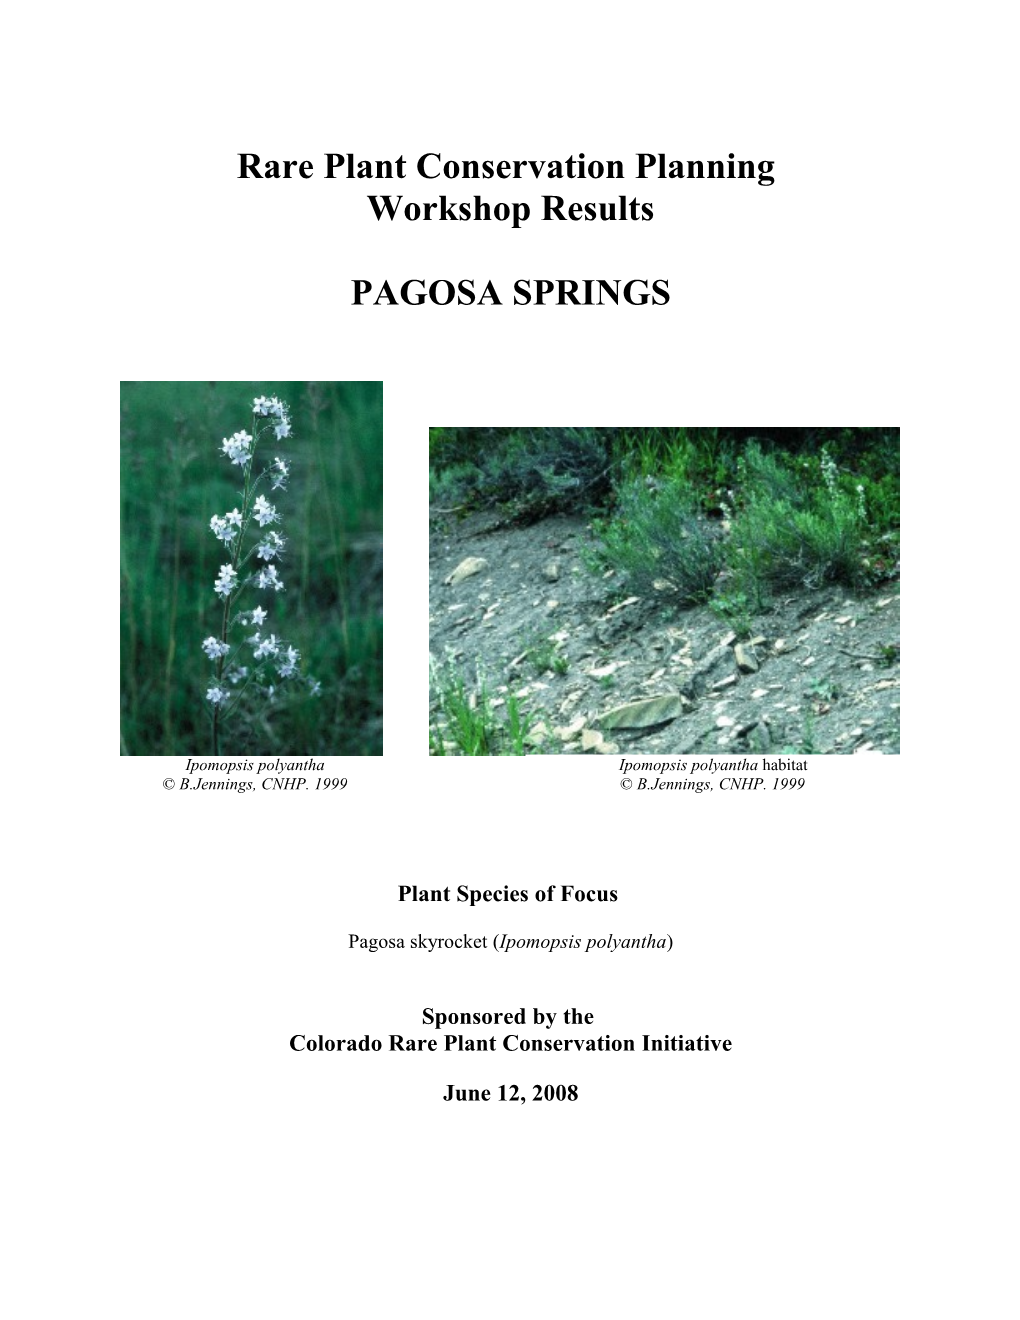 PAGOSA: Rare Plant Conservation Planning Workshop